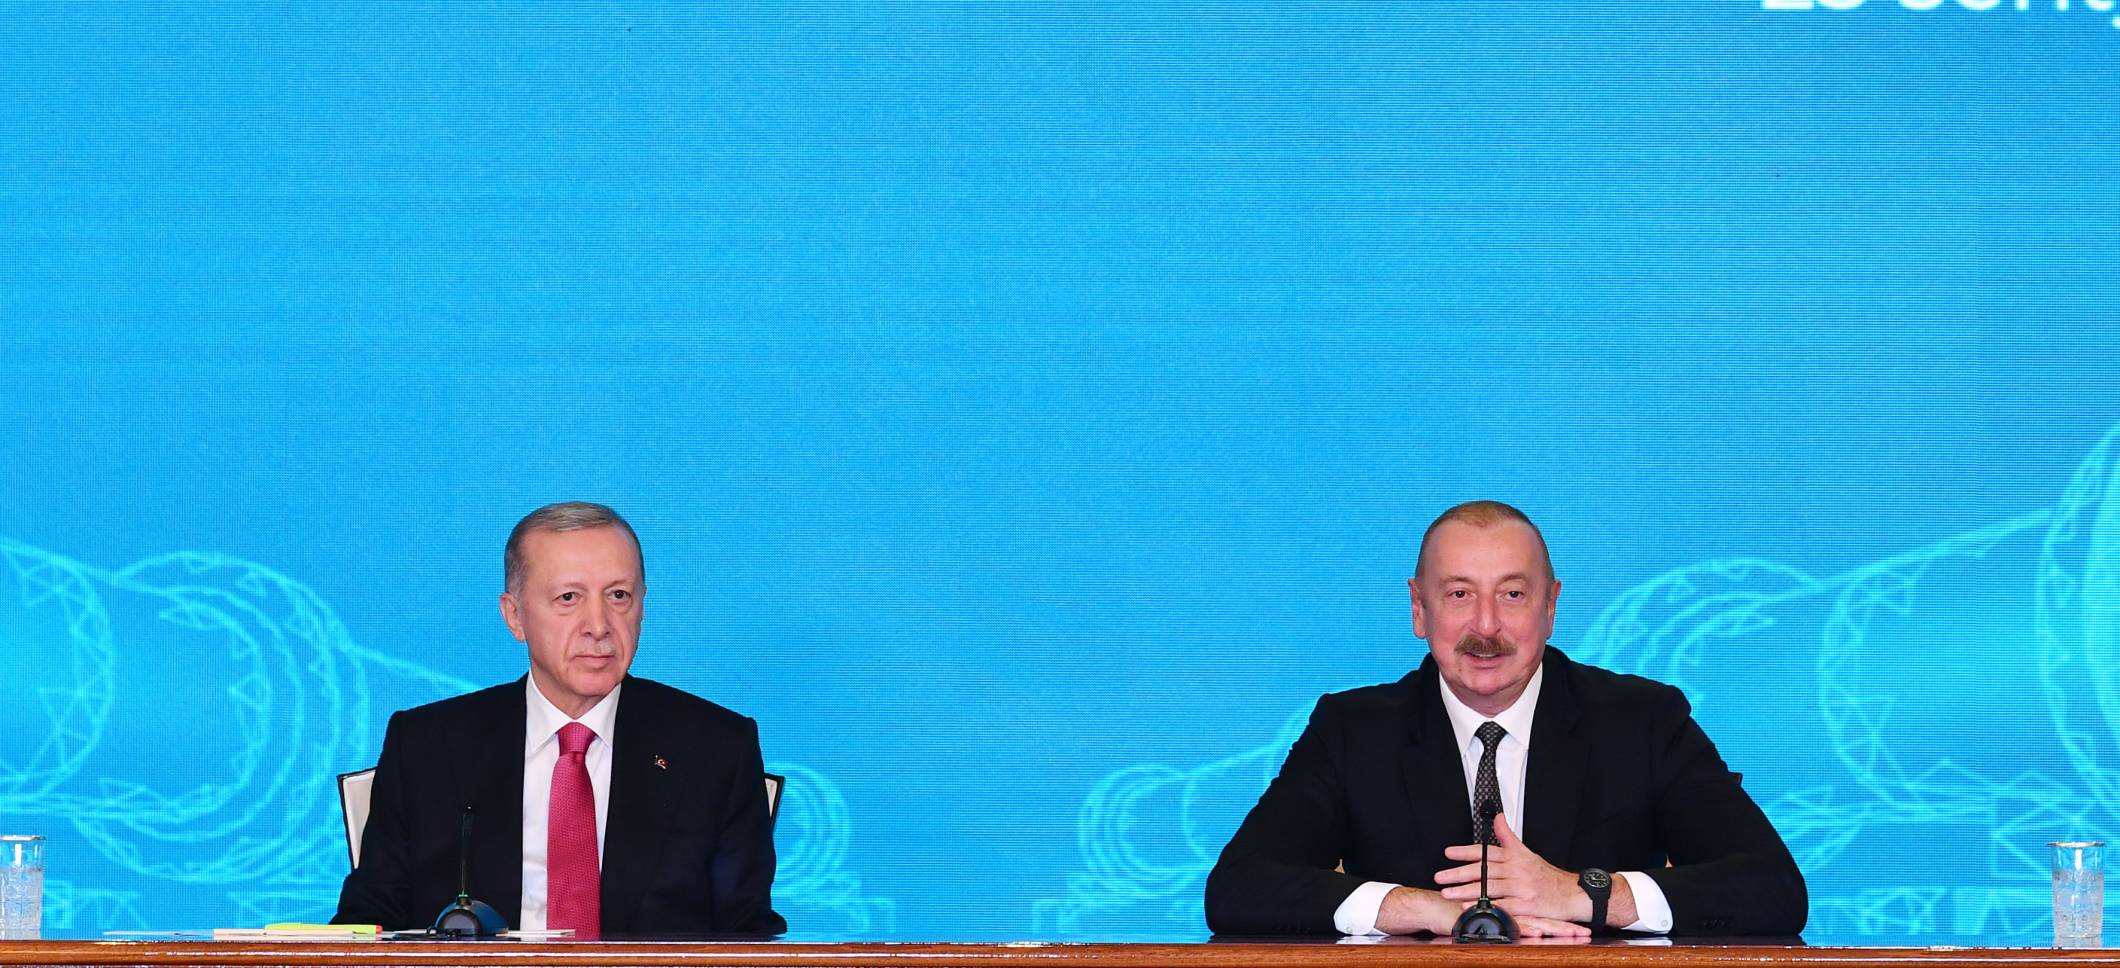 Ilham Aliyev and President Recep Tayyip Erdogan are making press statements